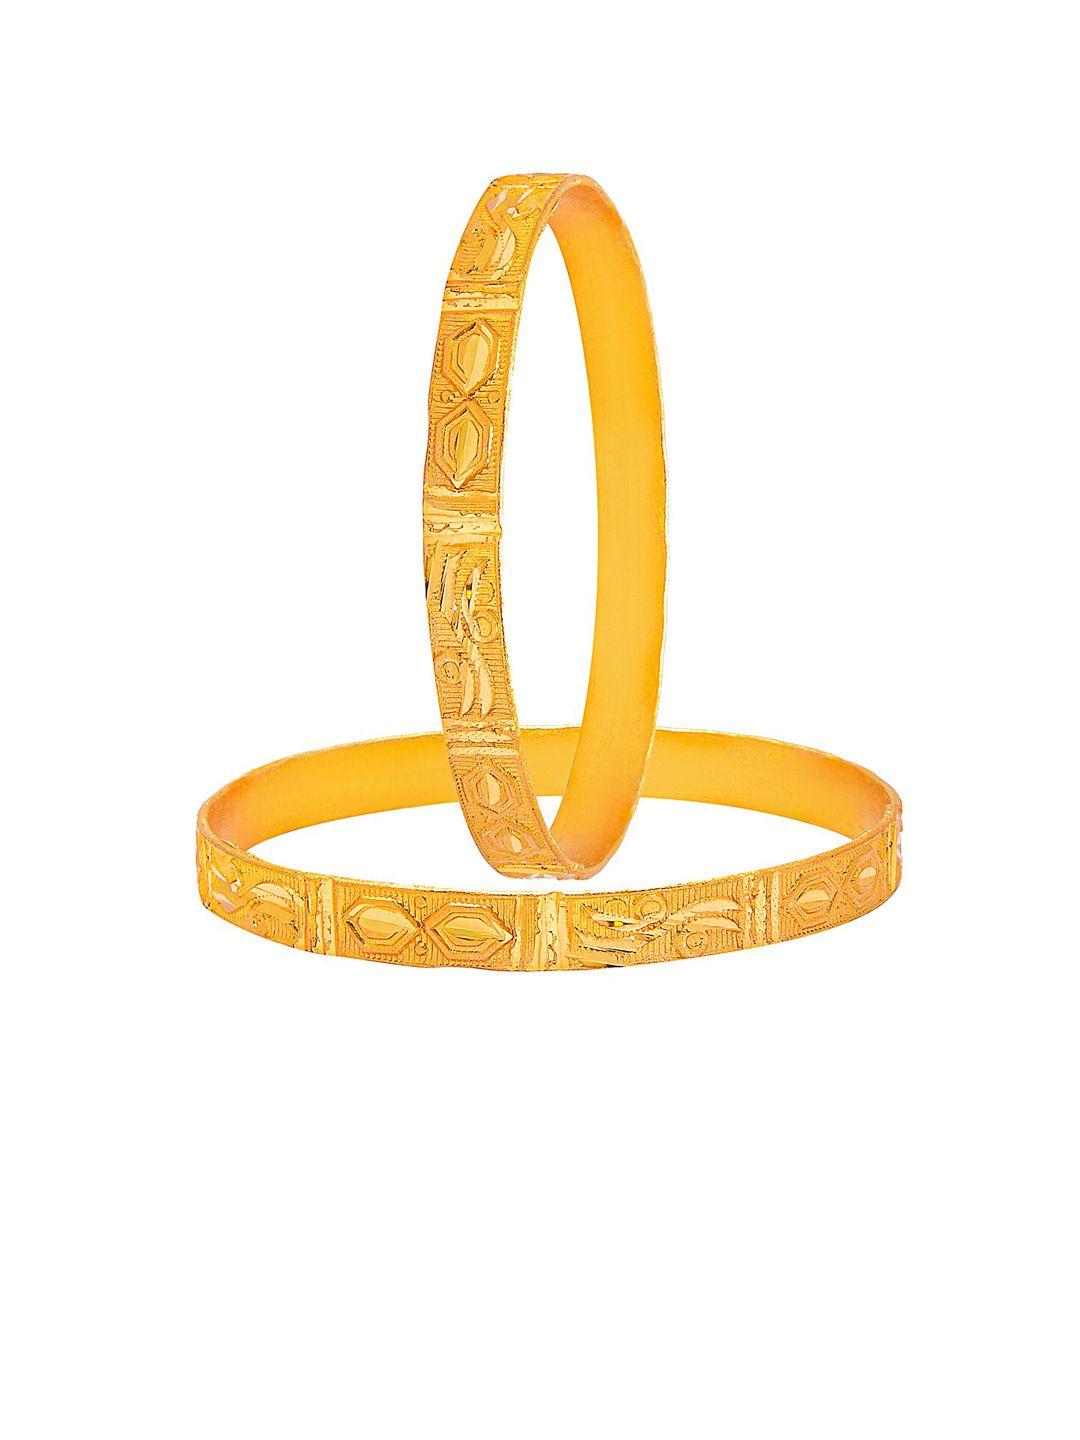 shining jewel - by shivansh gold-toned set of 4 gold-plated bangles